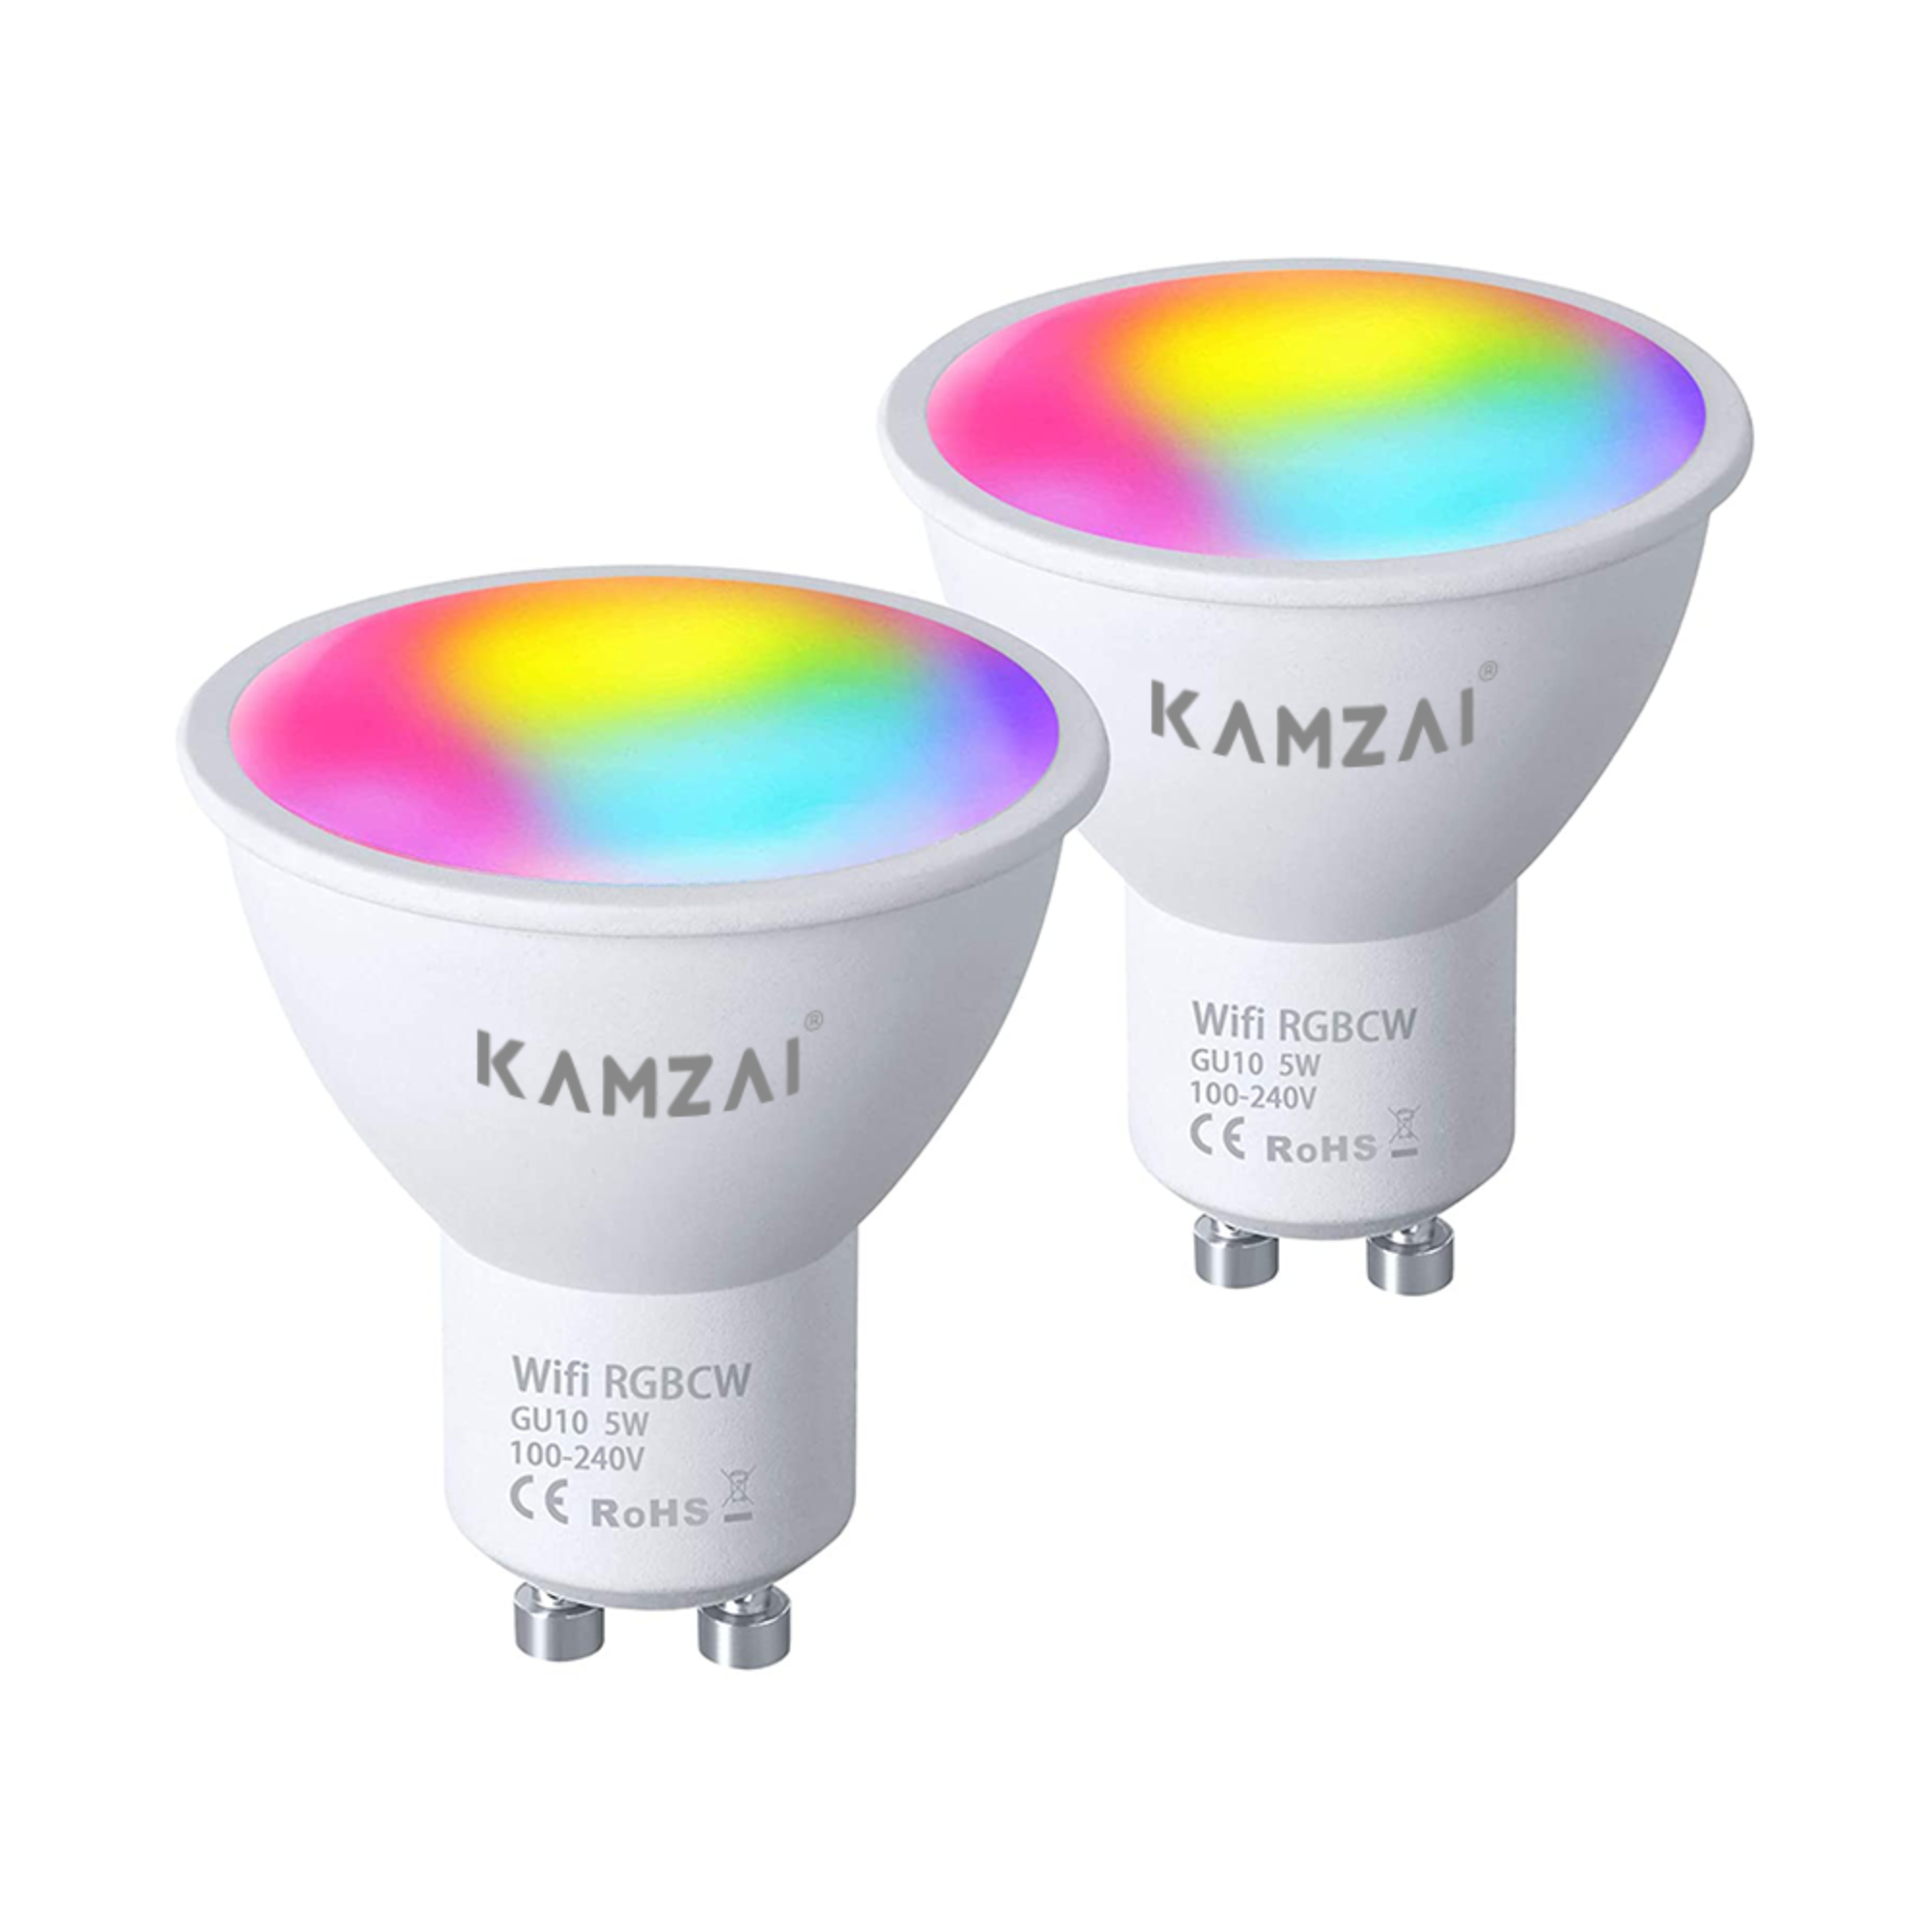 overse Opaque byld Kamzai Smart WiFi GU10 Spot Light, 5W 2 pack by Lumive store